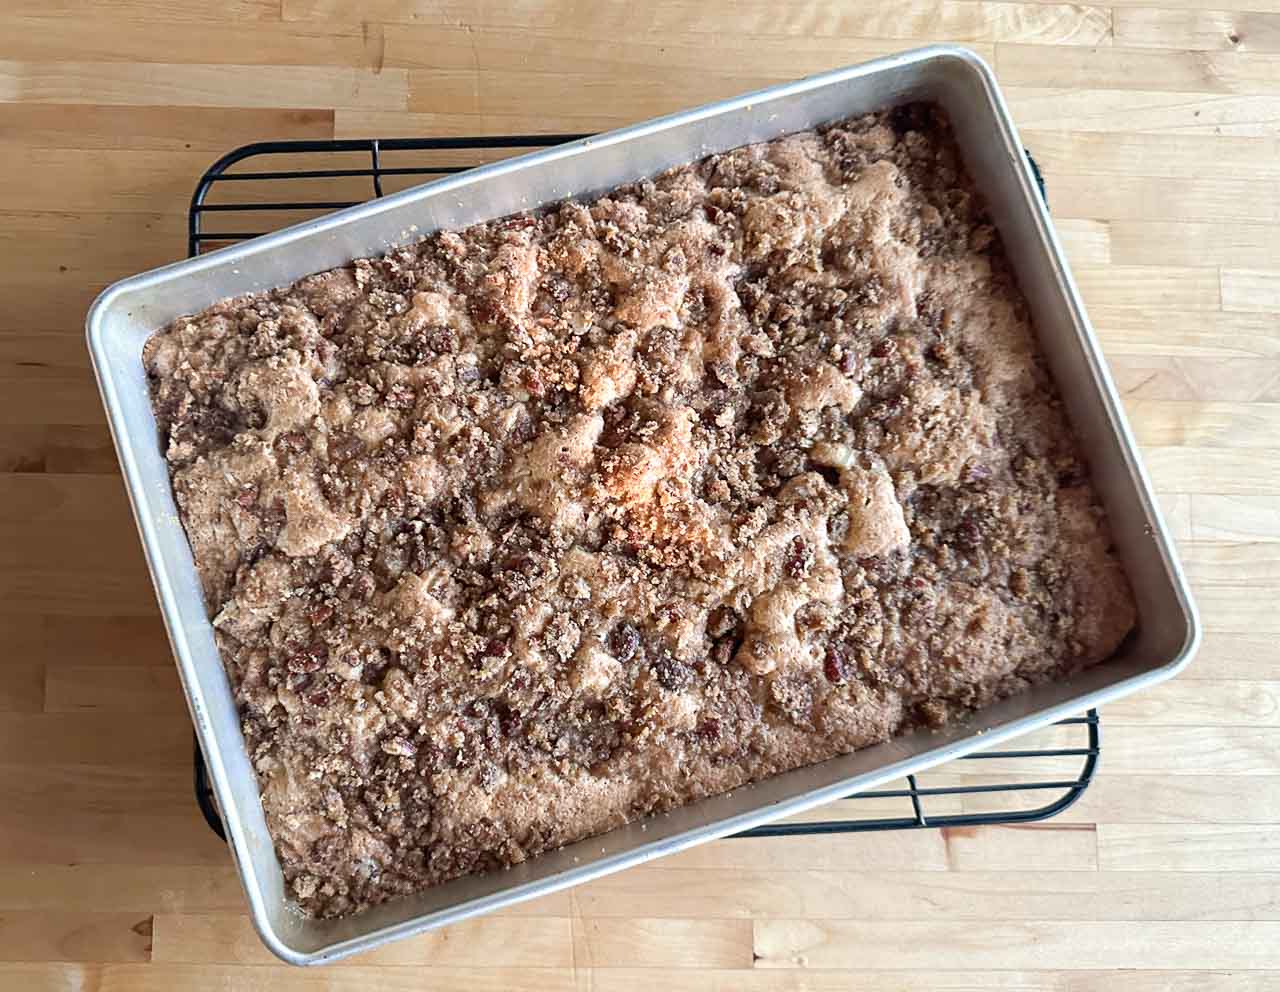 brown sugar pecan streusel topping over apple cake batter in pan after baking.